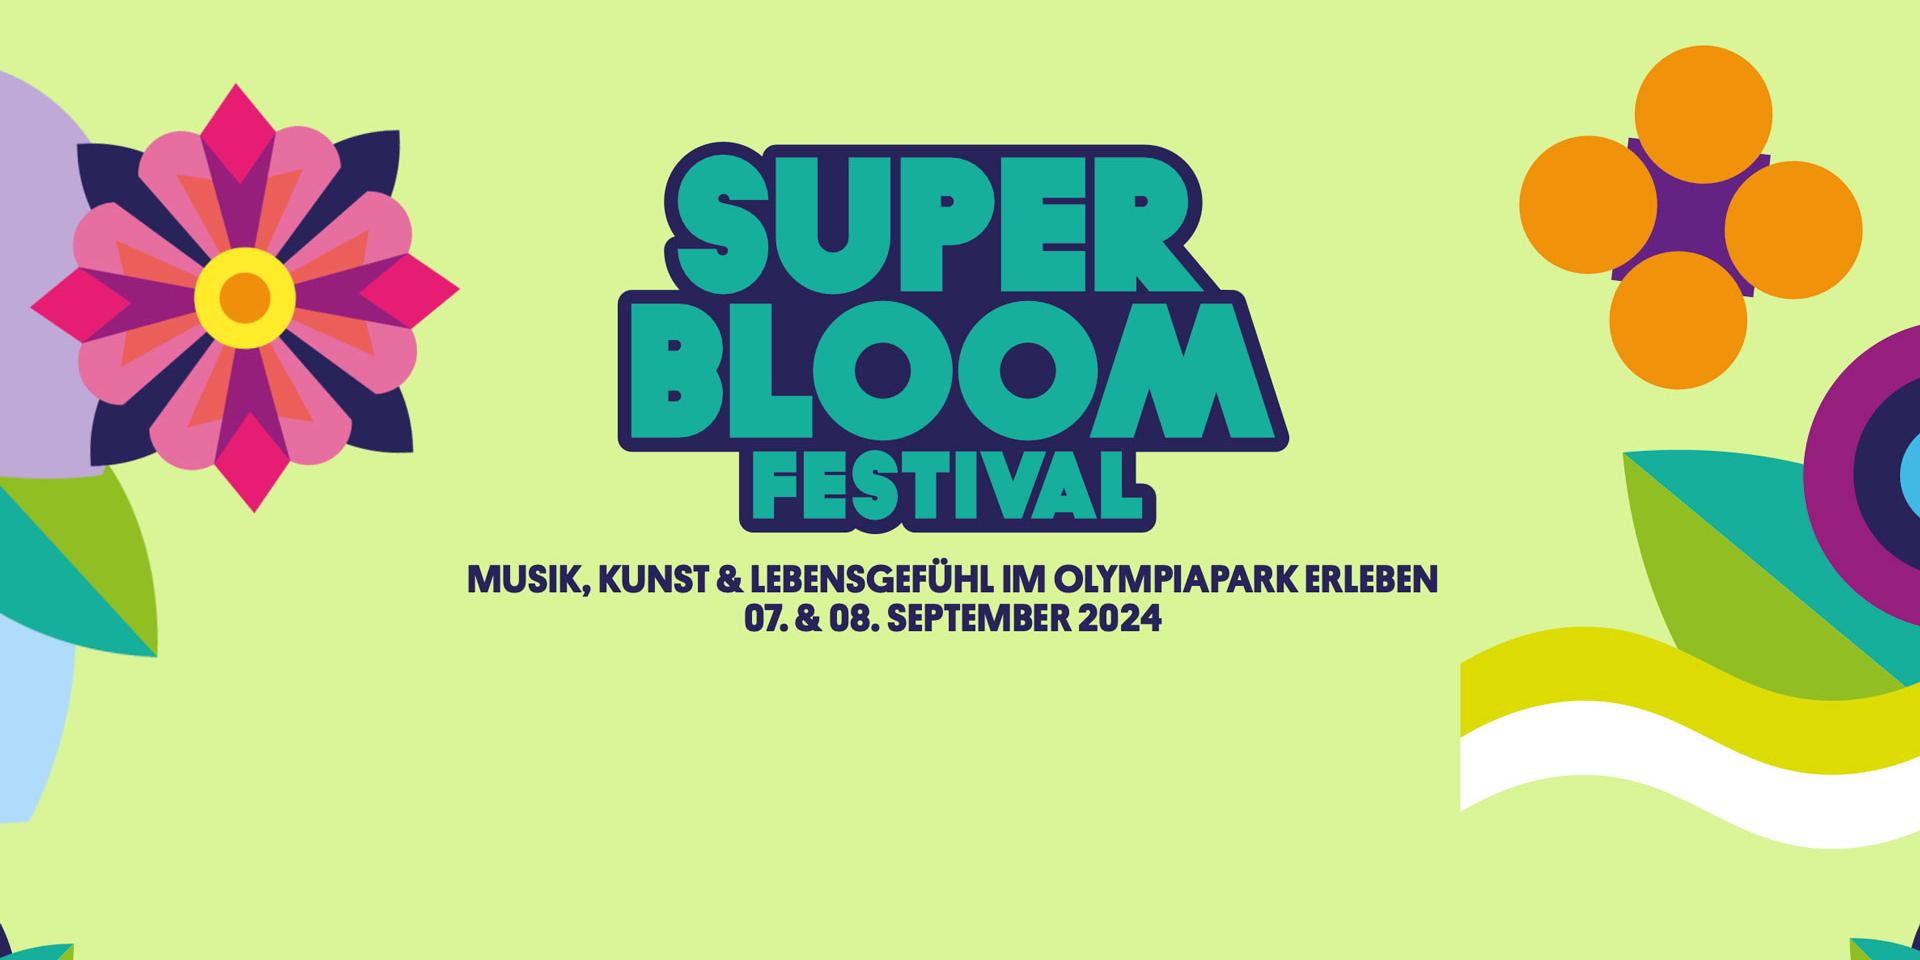 BAYERN 3 Superbloom Festival